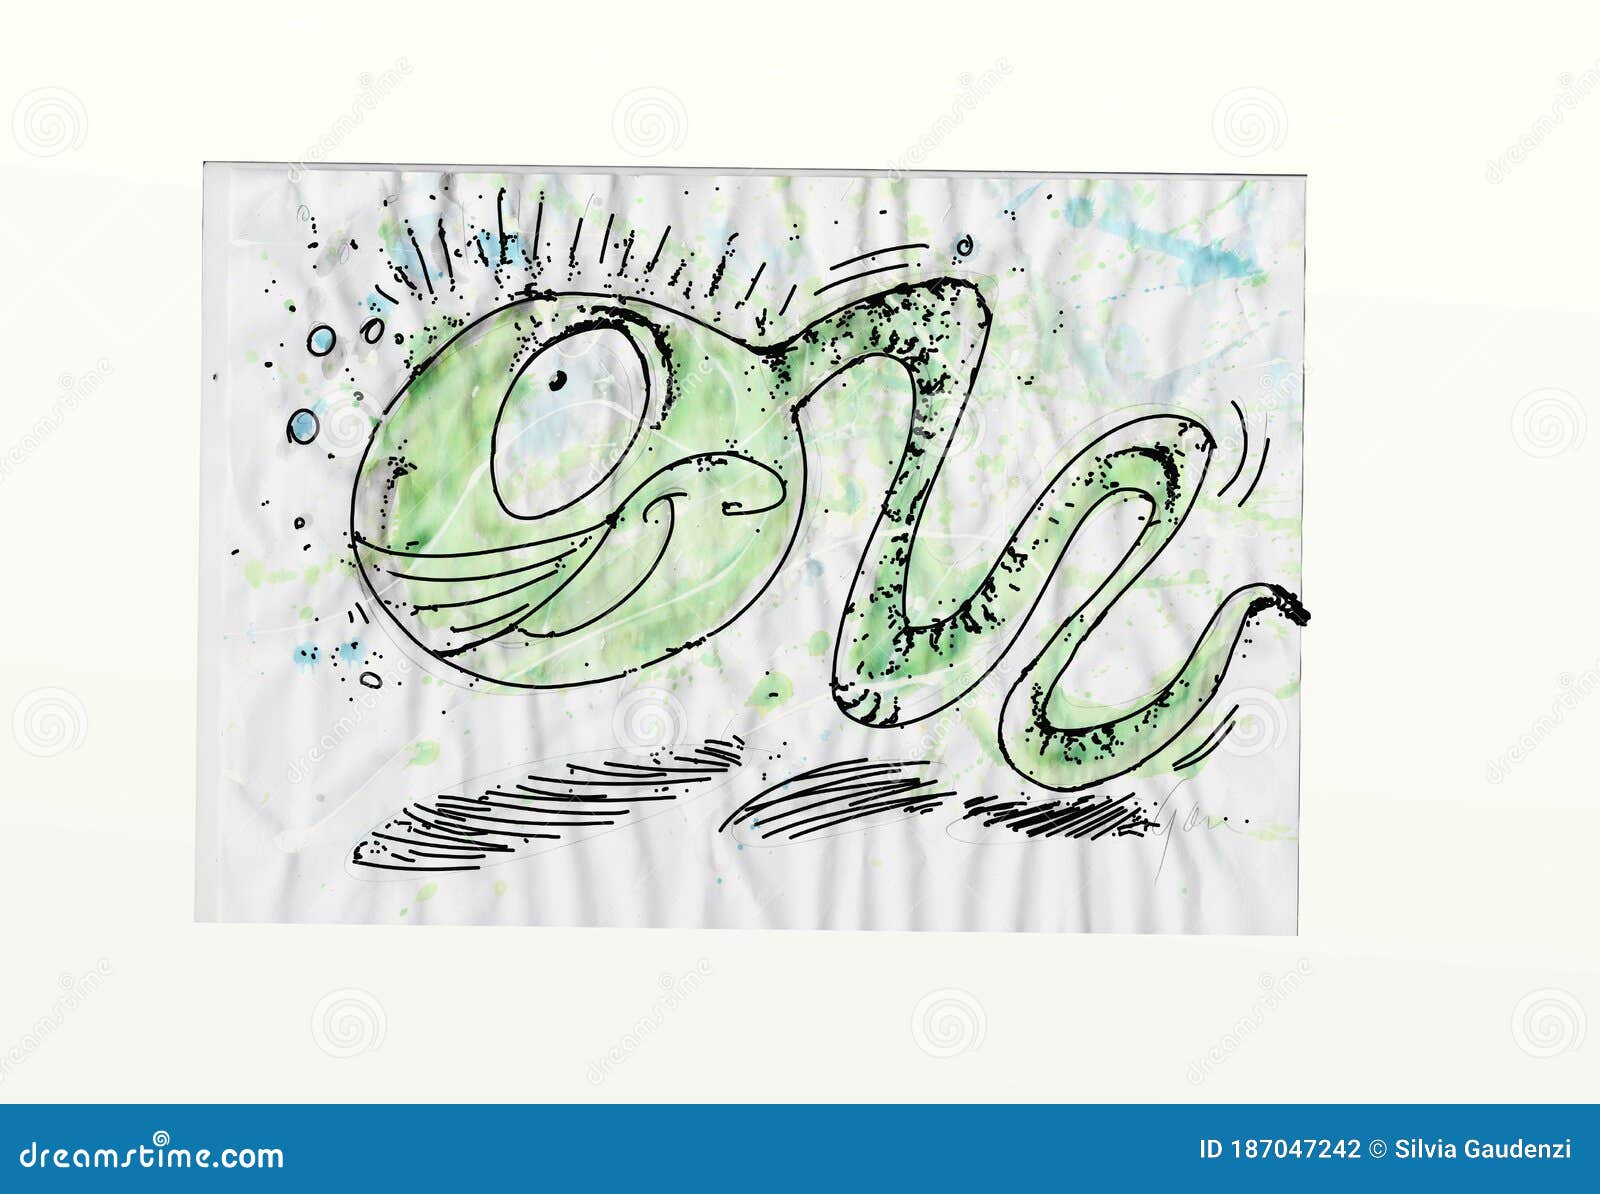 tadpole animated , with bandana anti covid 19